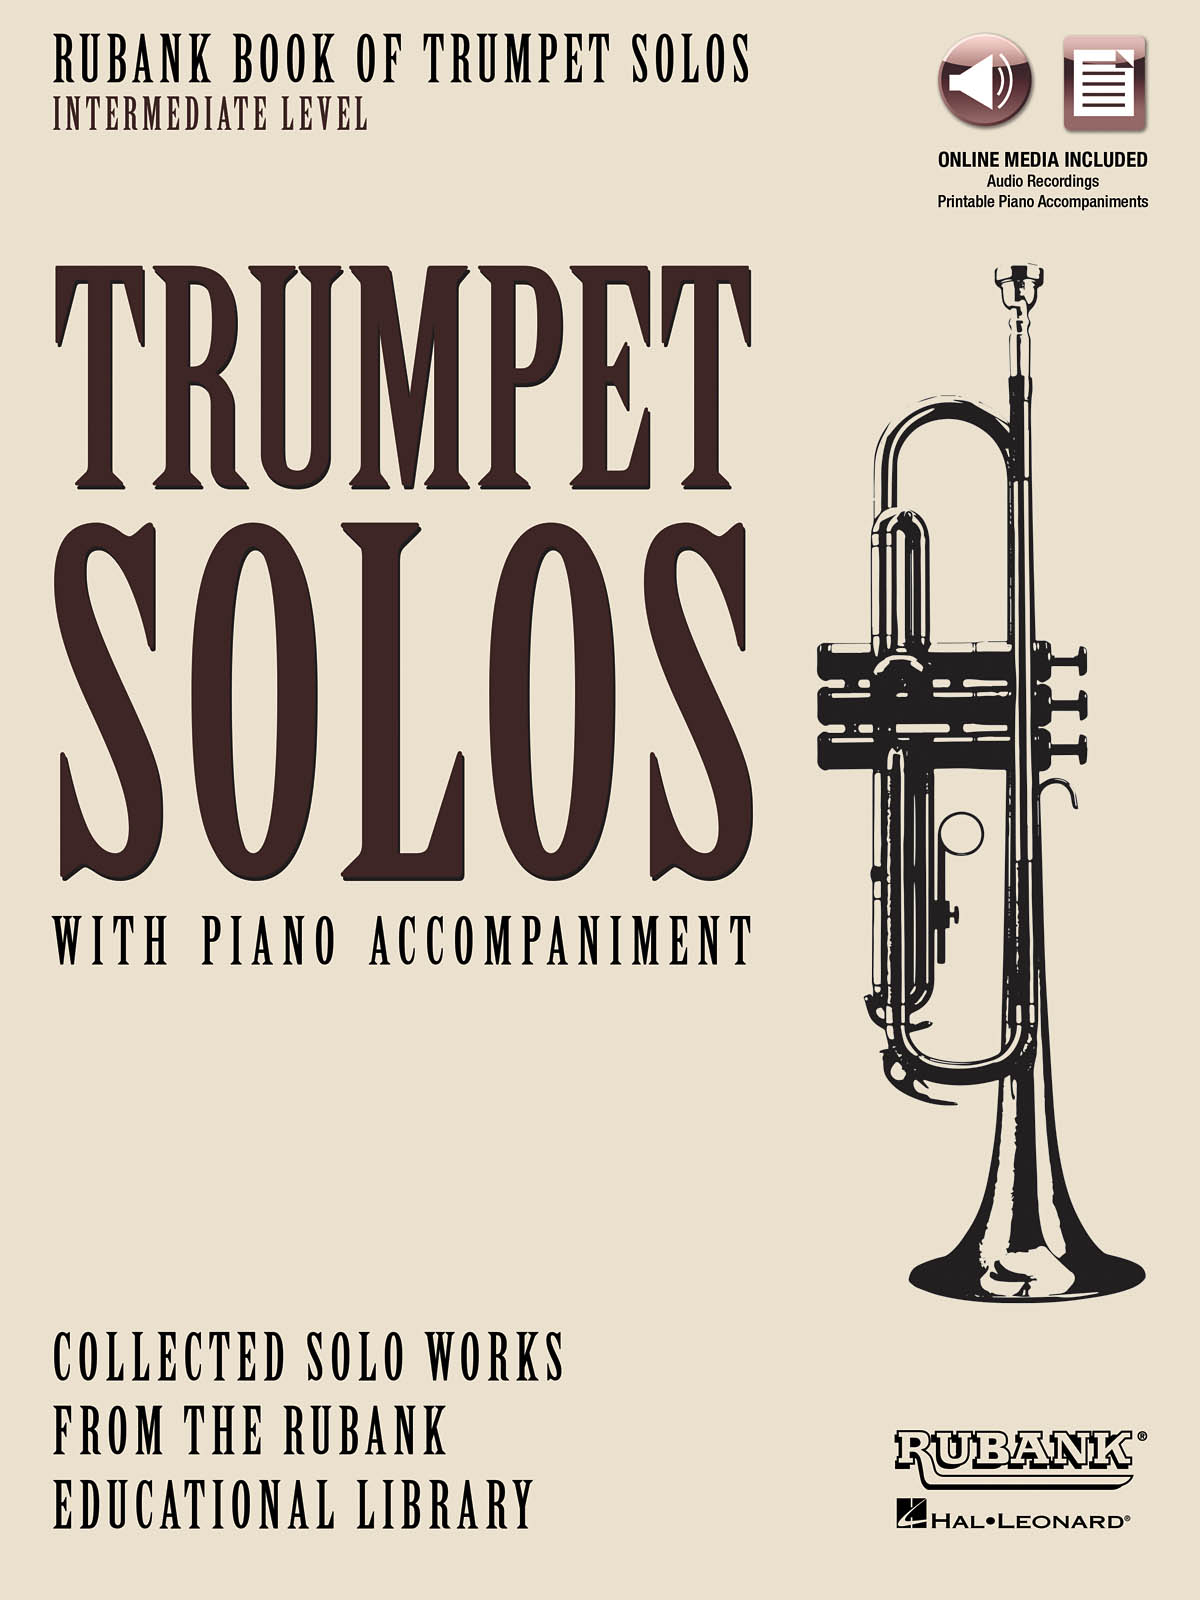 Rubank Book of Trumpet Solos - Intermediate Level - with Piano Accompaniment